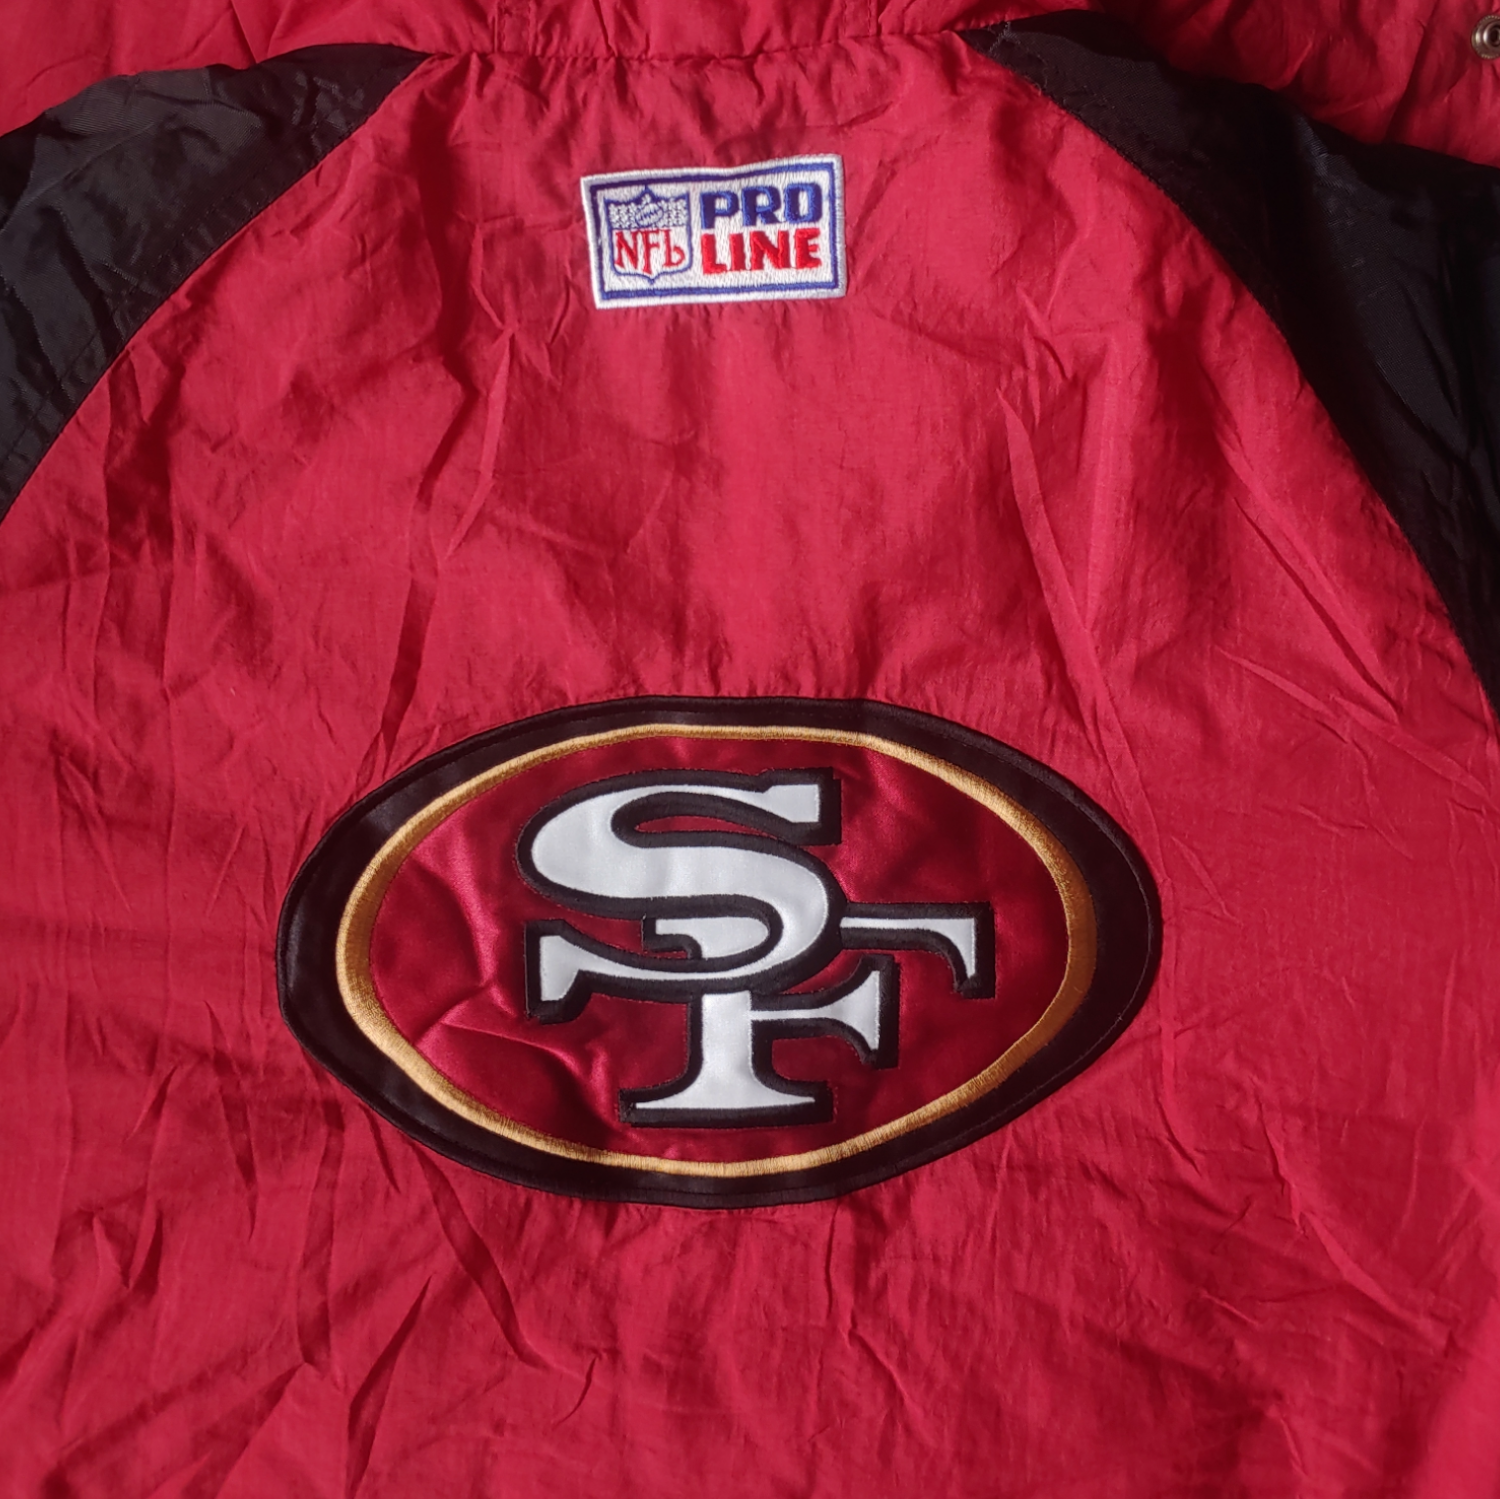 Vintage 90s Starter NFL Pro Line San Francisco 49ers Jacket With Back Spell Out Badge - Casspios Dream